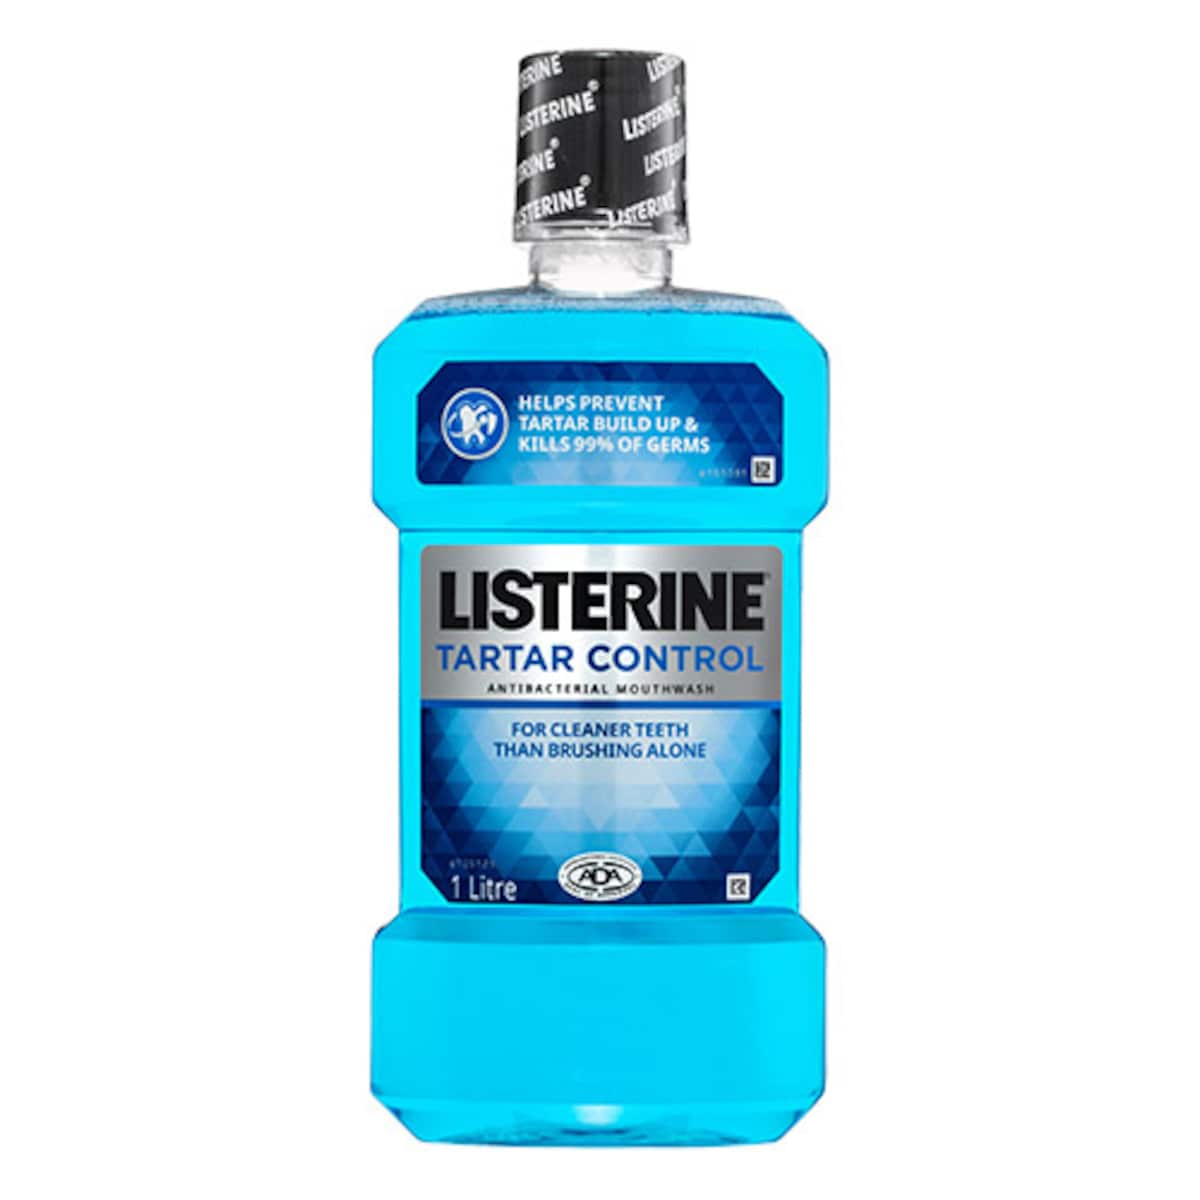 Listerine Tartar Control Antibacterial Mouthwash 1 Litre